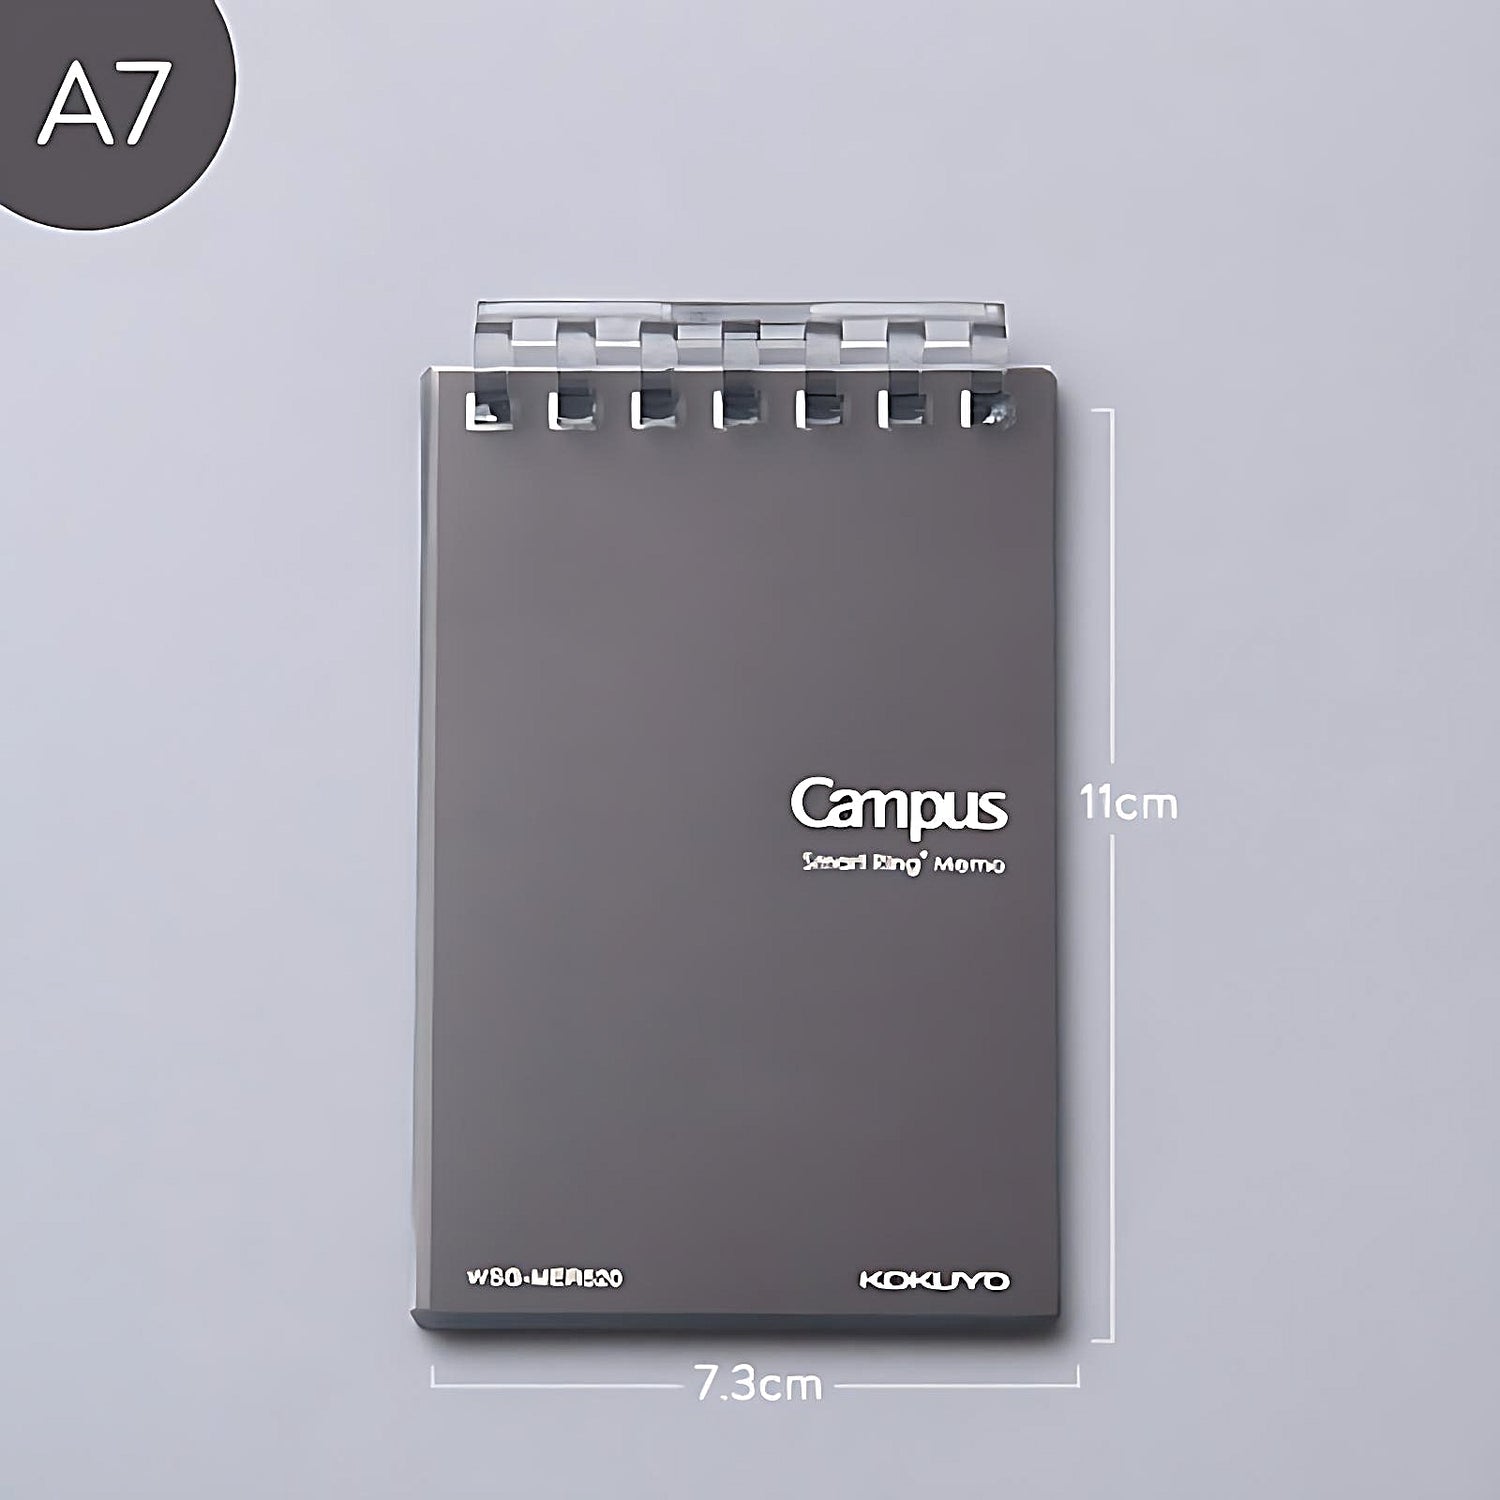 a black Kokuyo Smart Ring memo pad on a grey background